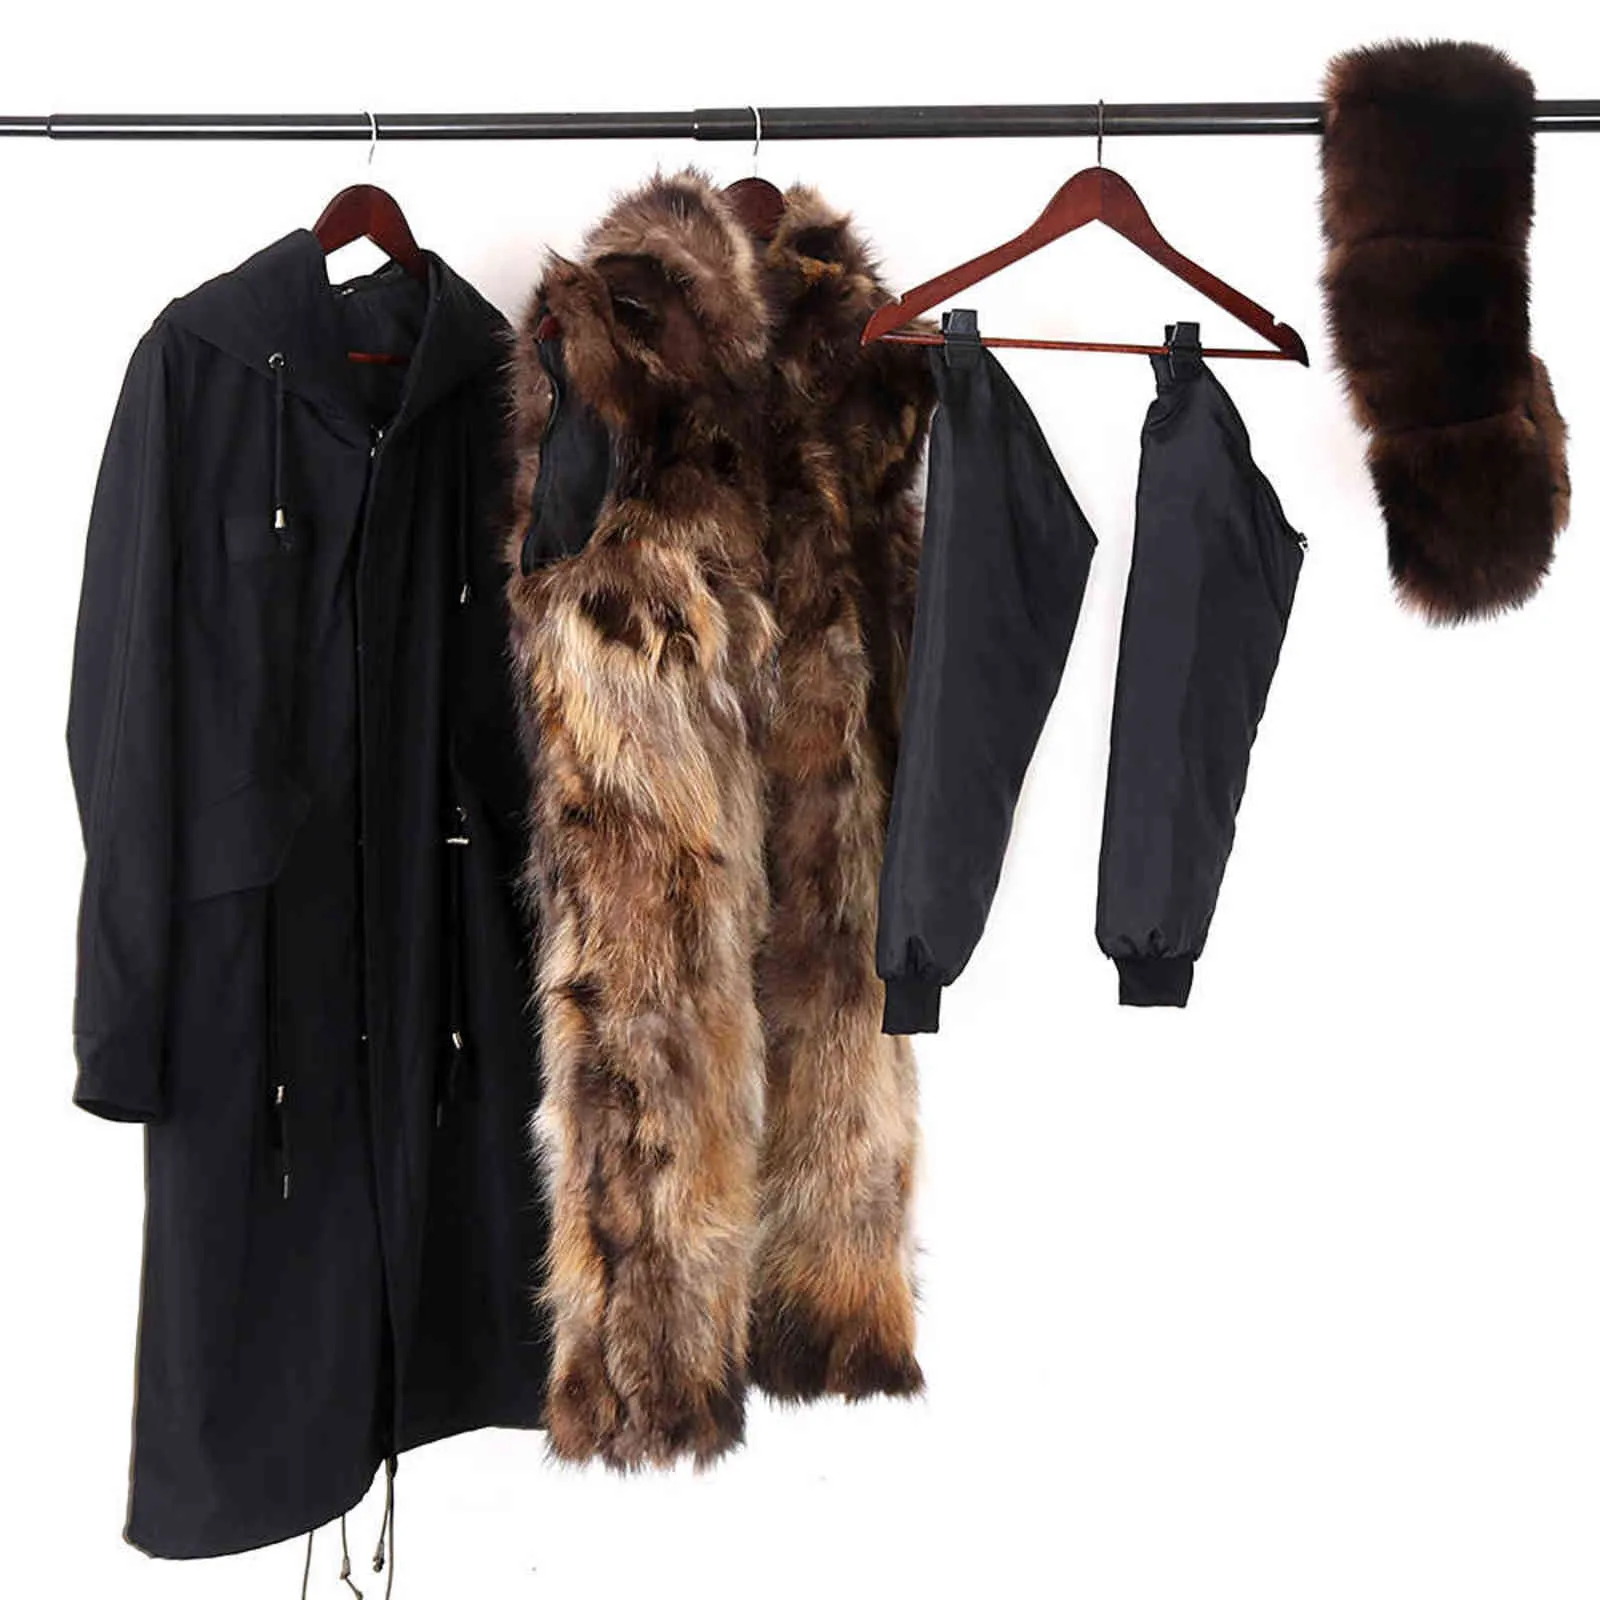 Waterproof Men Parka Winter Jacket Fashion Warm Long Rabbit Fur Coat Man Parkas Natural Fur Outerwear Streetwear 211110